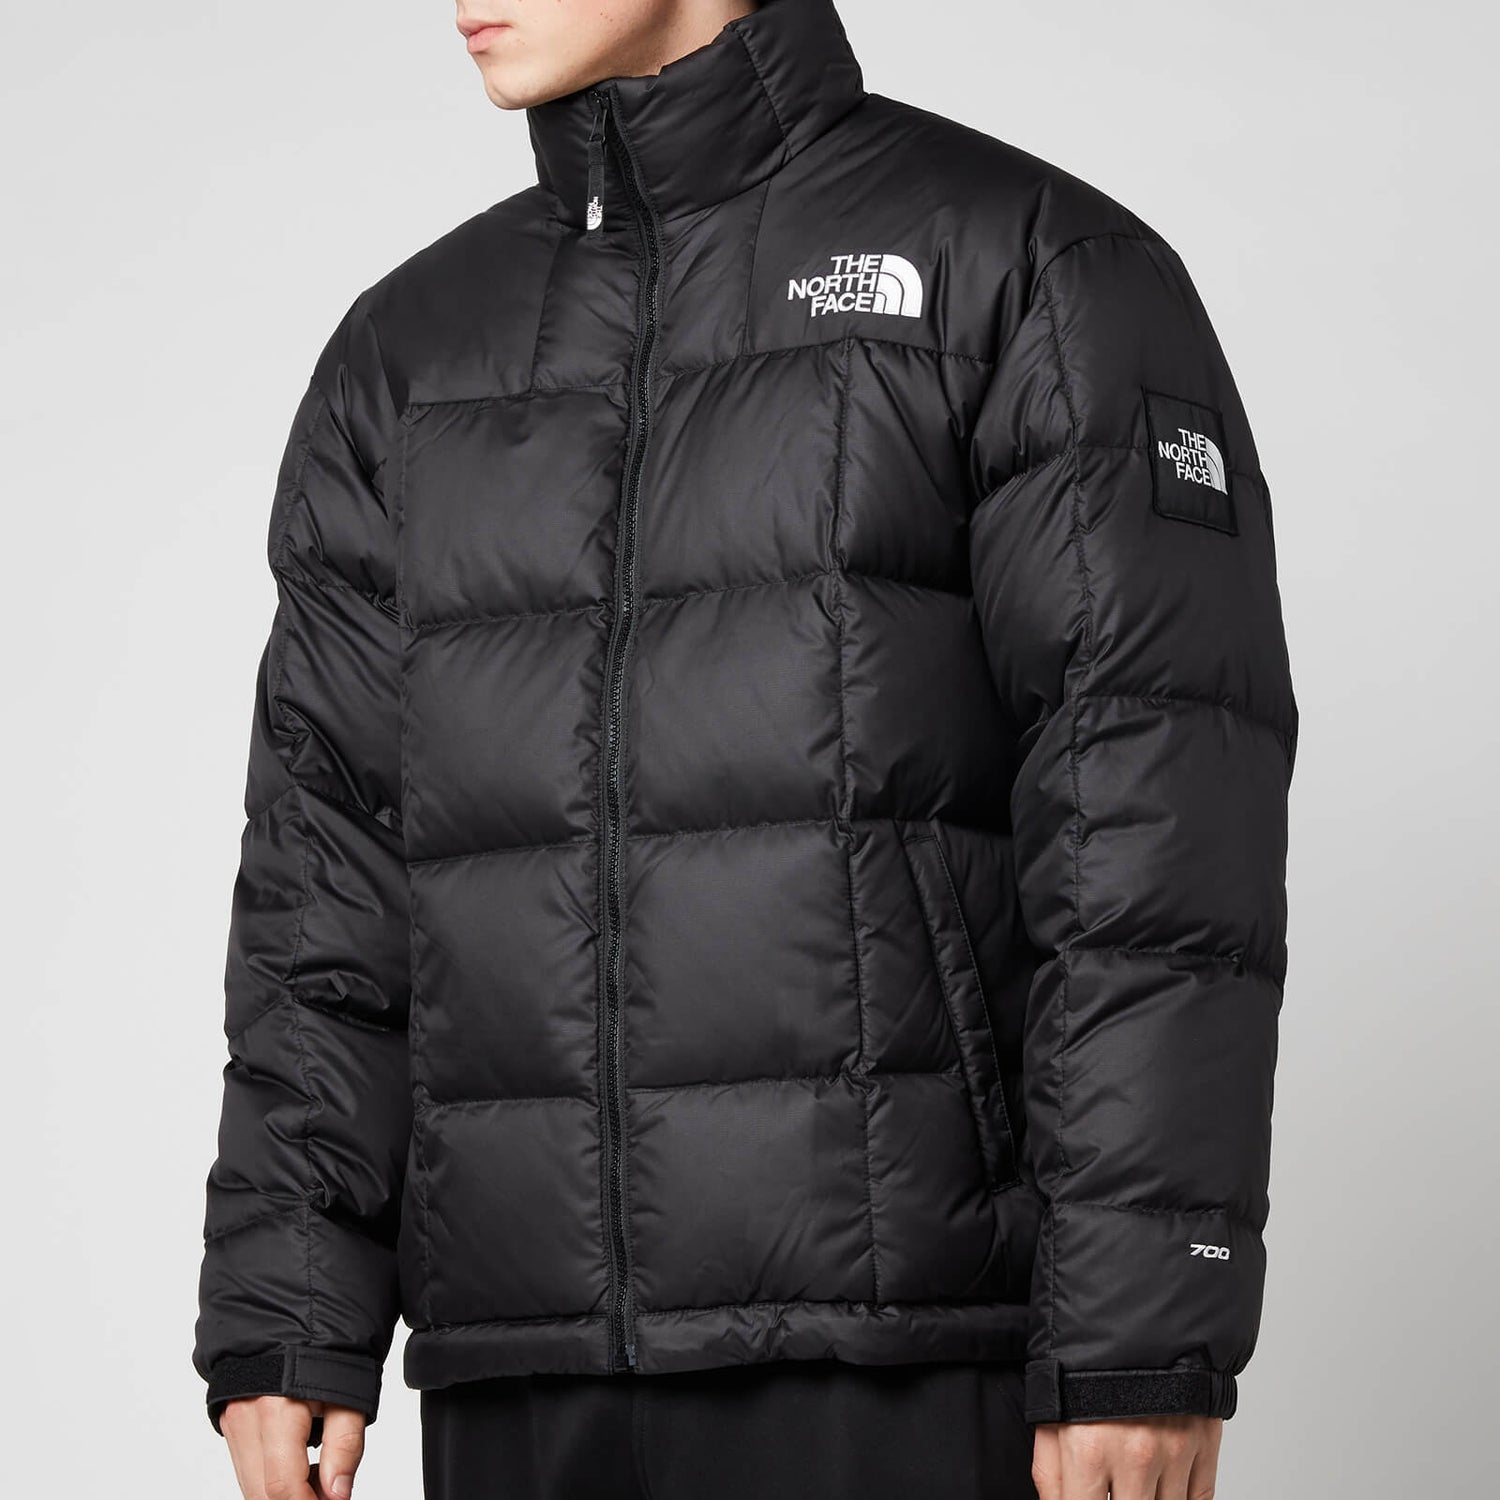 The North Face Men's Lhotse Jacket - TNF Black | TheHut.com